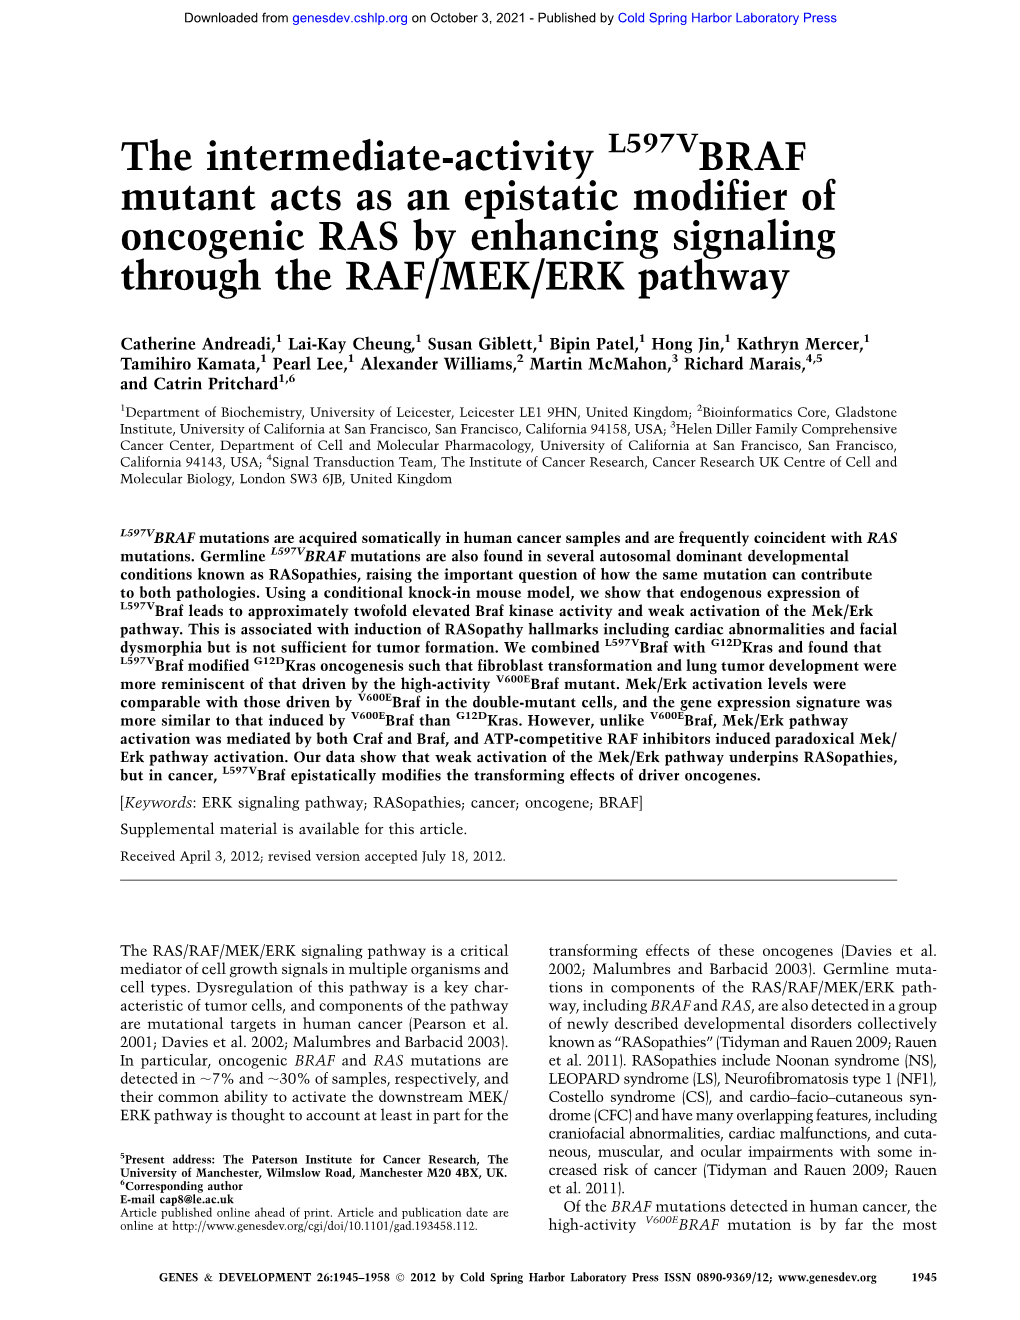 L597VBRAF Mutant Acts As an Epistatic Modifier of Oncogenic RAS by Enhancing Signaling Through the RAF/MEK/ERK Pathway